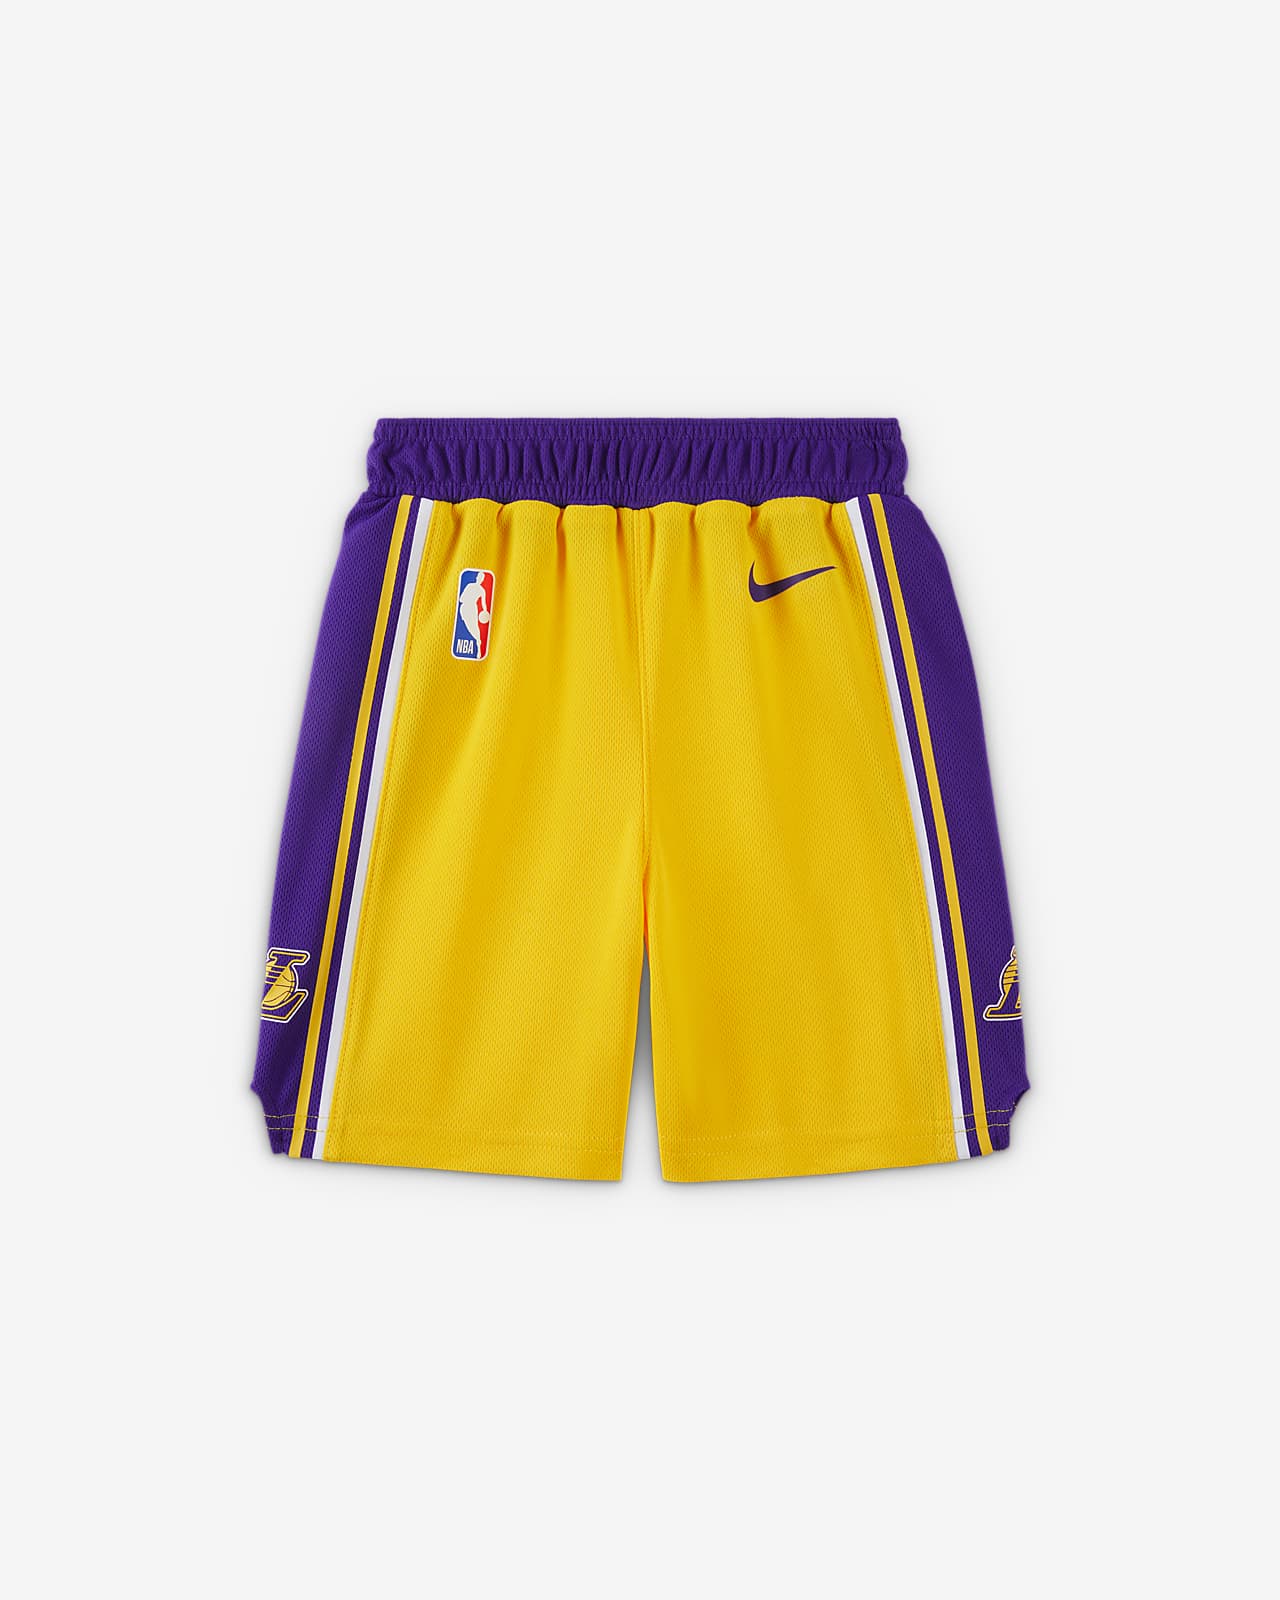 洛杉矶湖人队 Icon Edition Nike NBA 婴童短裤